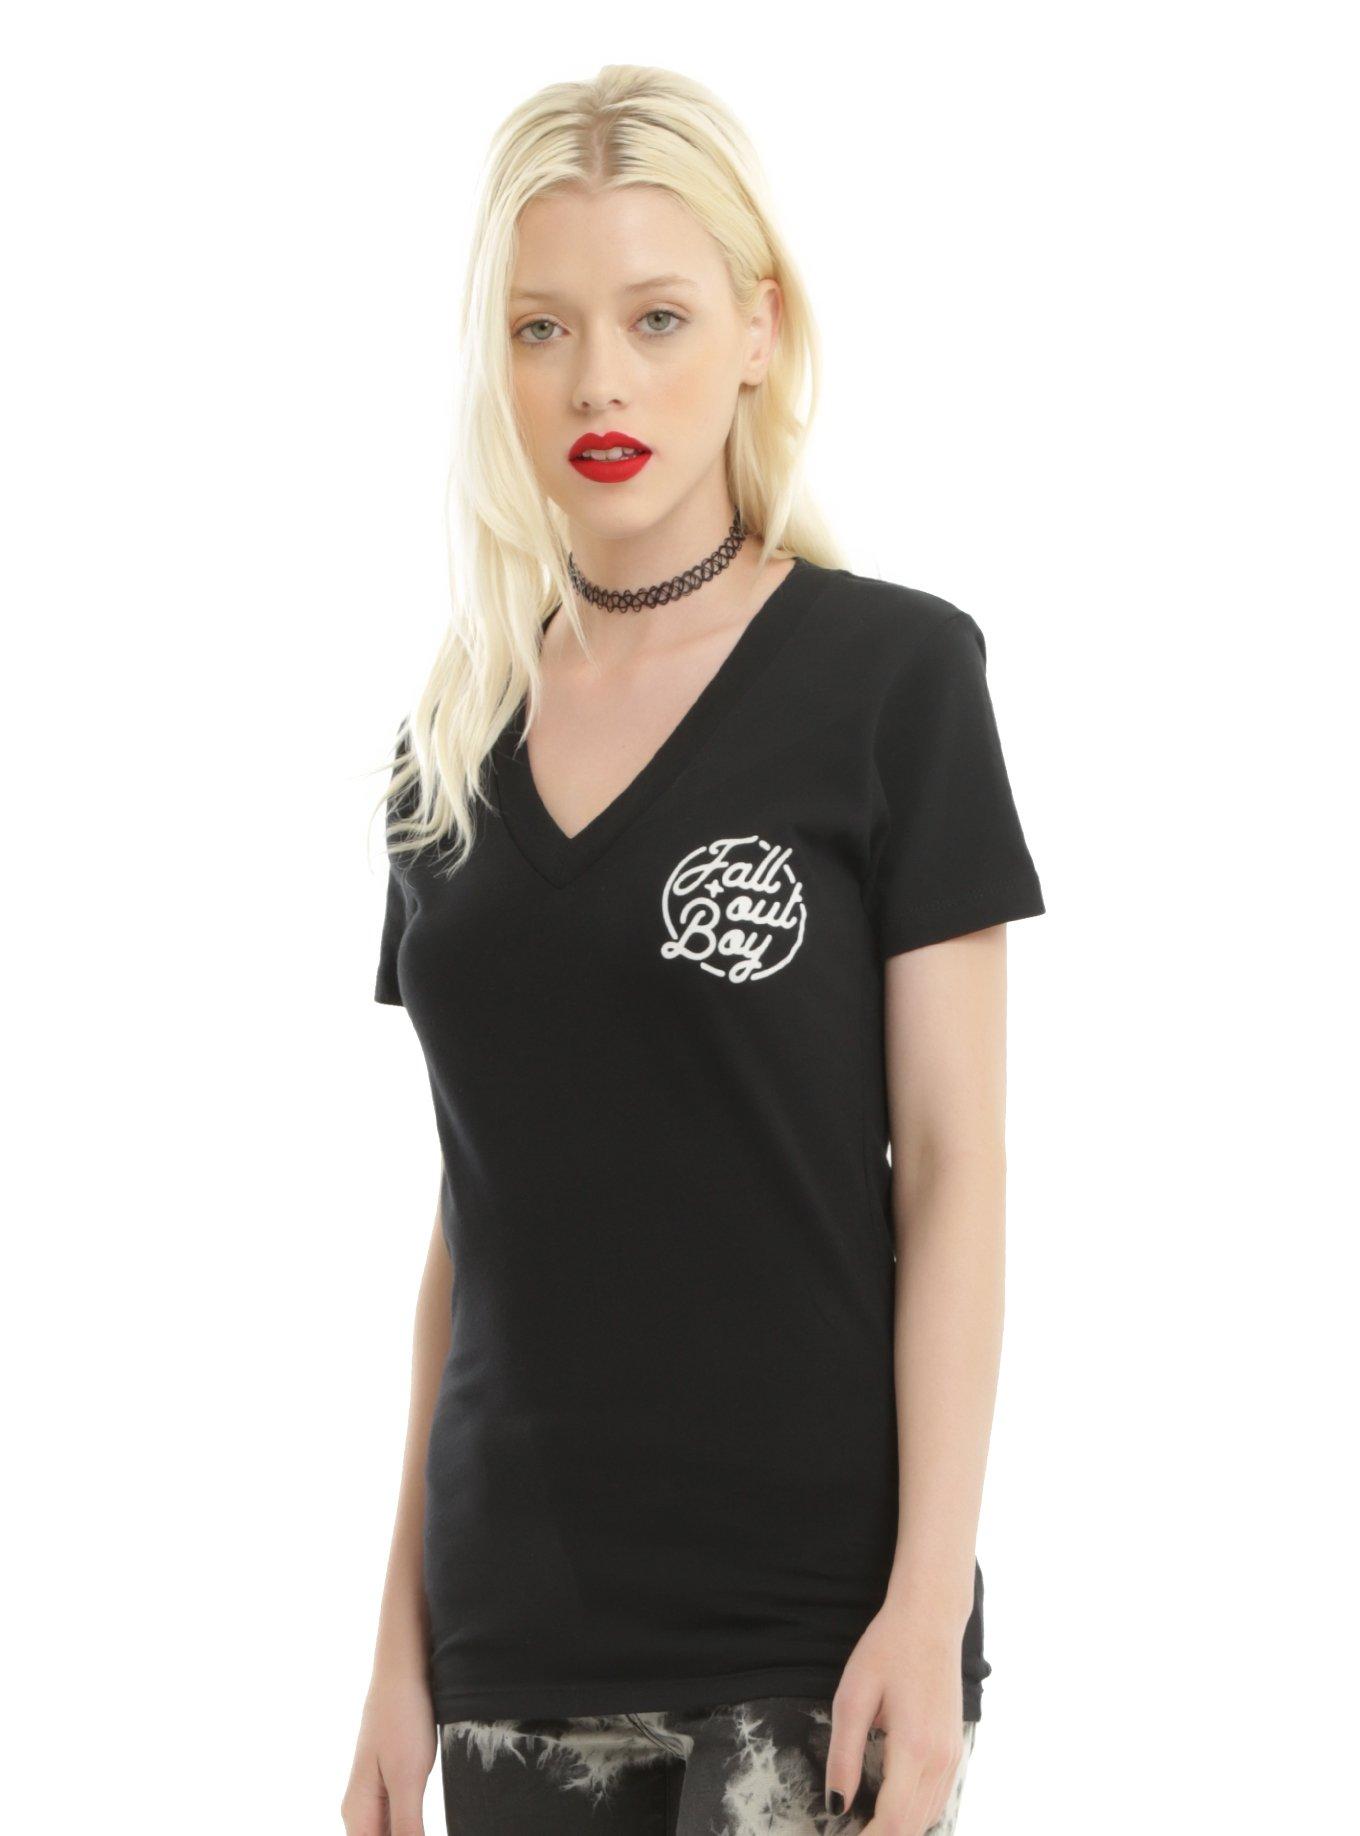 Fall Out Boy Emblem Girls T-Shirt, BLACK, hi-res